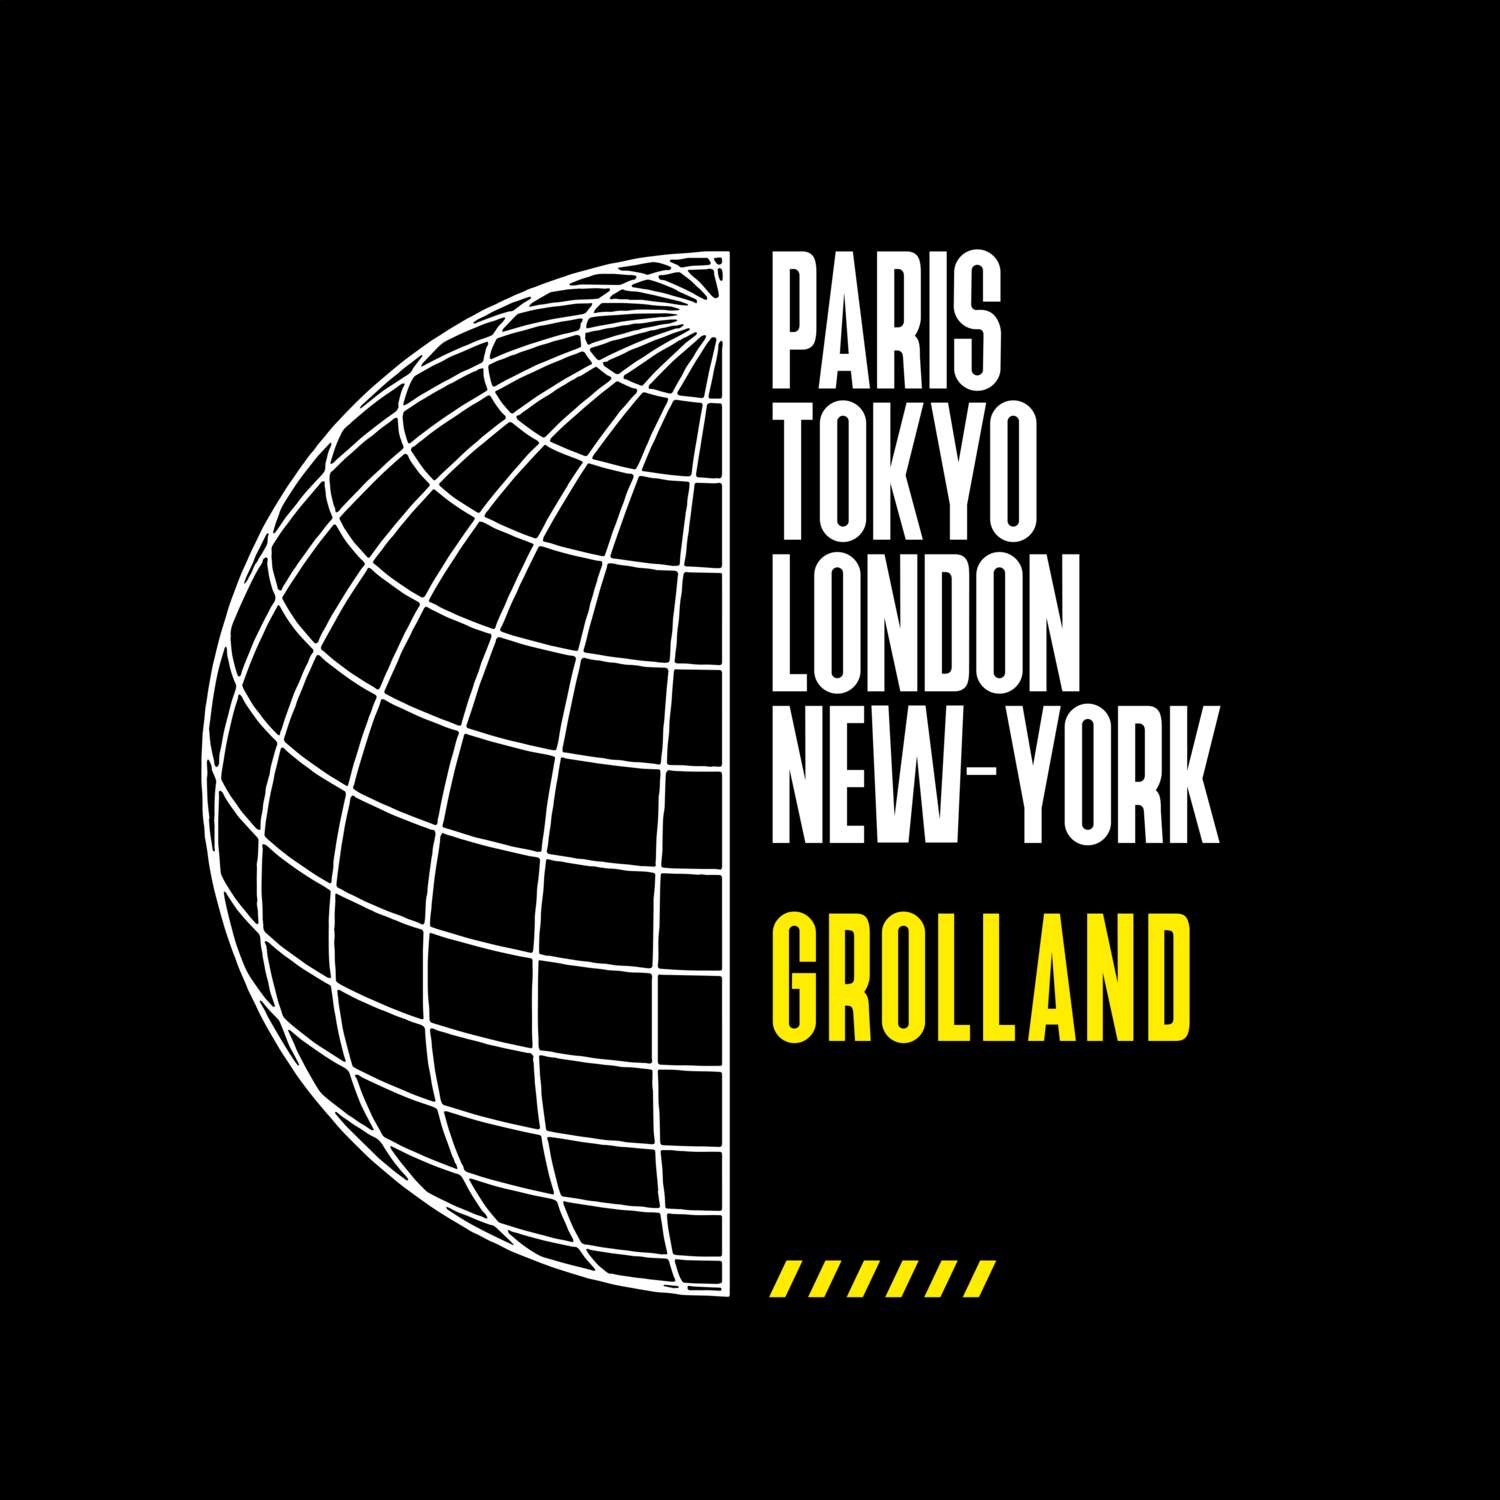 Grolland T-Shirt »Paris Tokyo London«